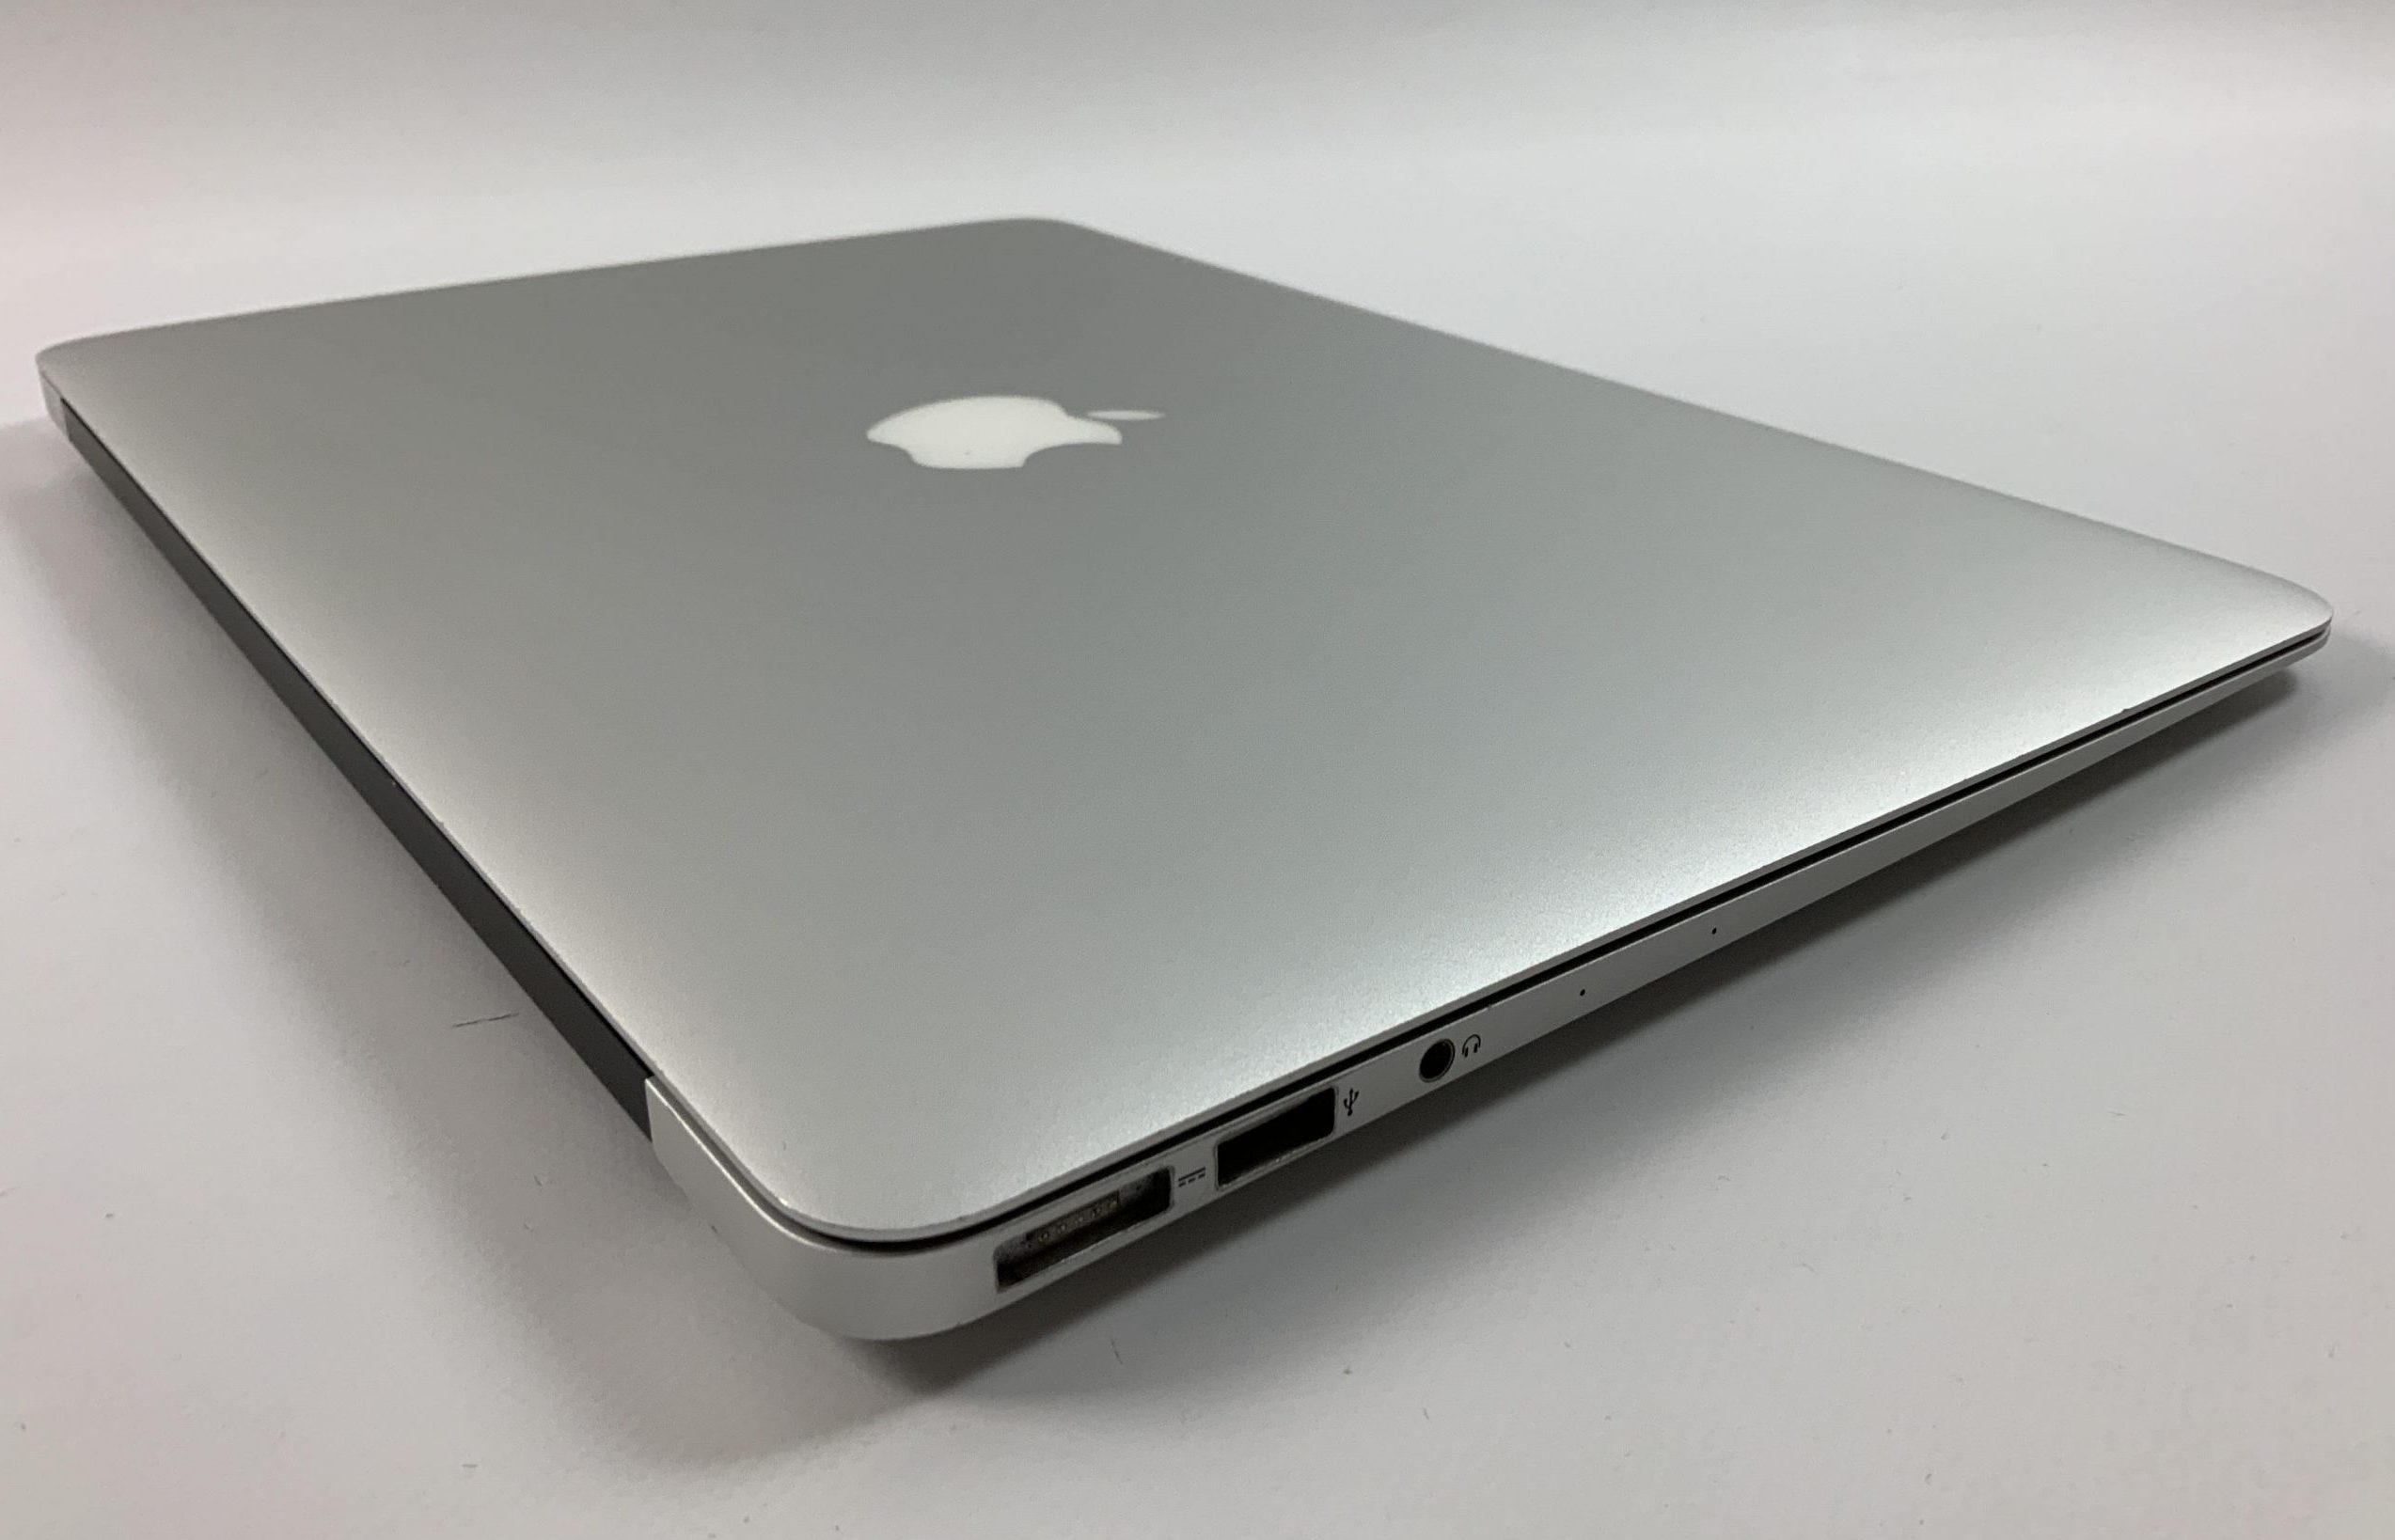 MacBook Air 13" Early 2014 (Intel Core i7 1.7 GHz 8 GB RAM 512 GB SSD), Intel Core i7 1.7 GHz, 8 GB RAM, 512 GB SSD, immagine 4